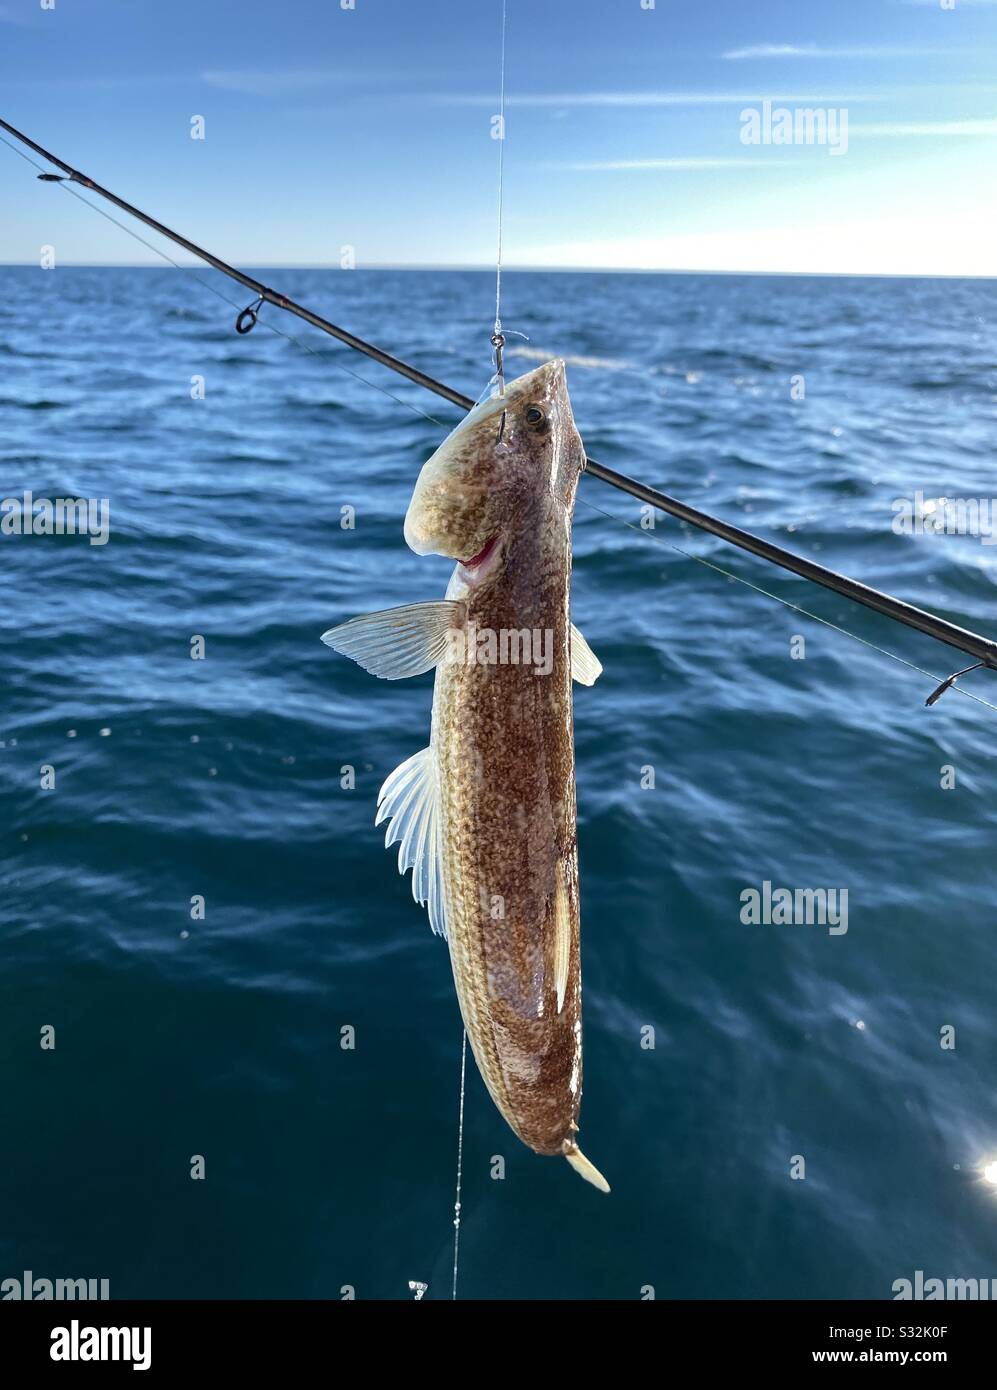 https://c8.alamy.com/comp/S32K0F/closeup-of-a-lizard-fish-caught-deep-water-fishing-in-gulf-of-mexico-S32K0F.jpg